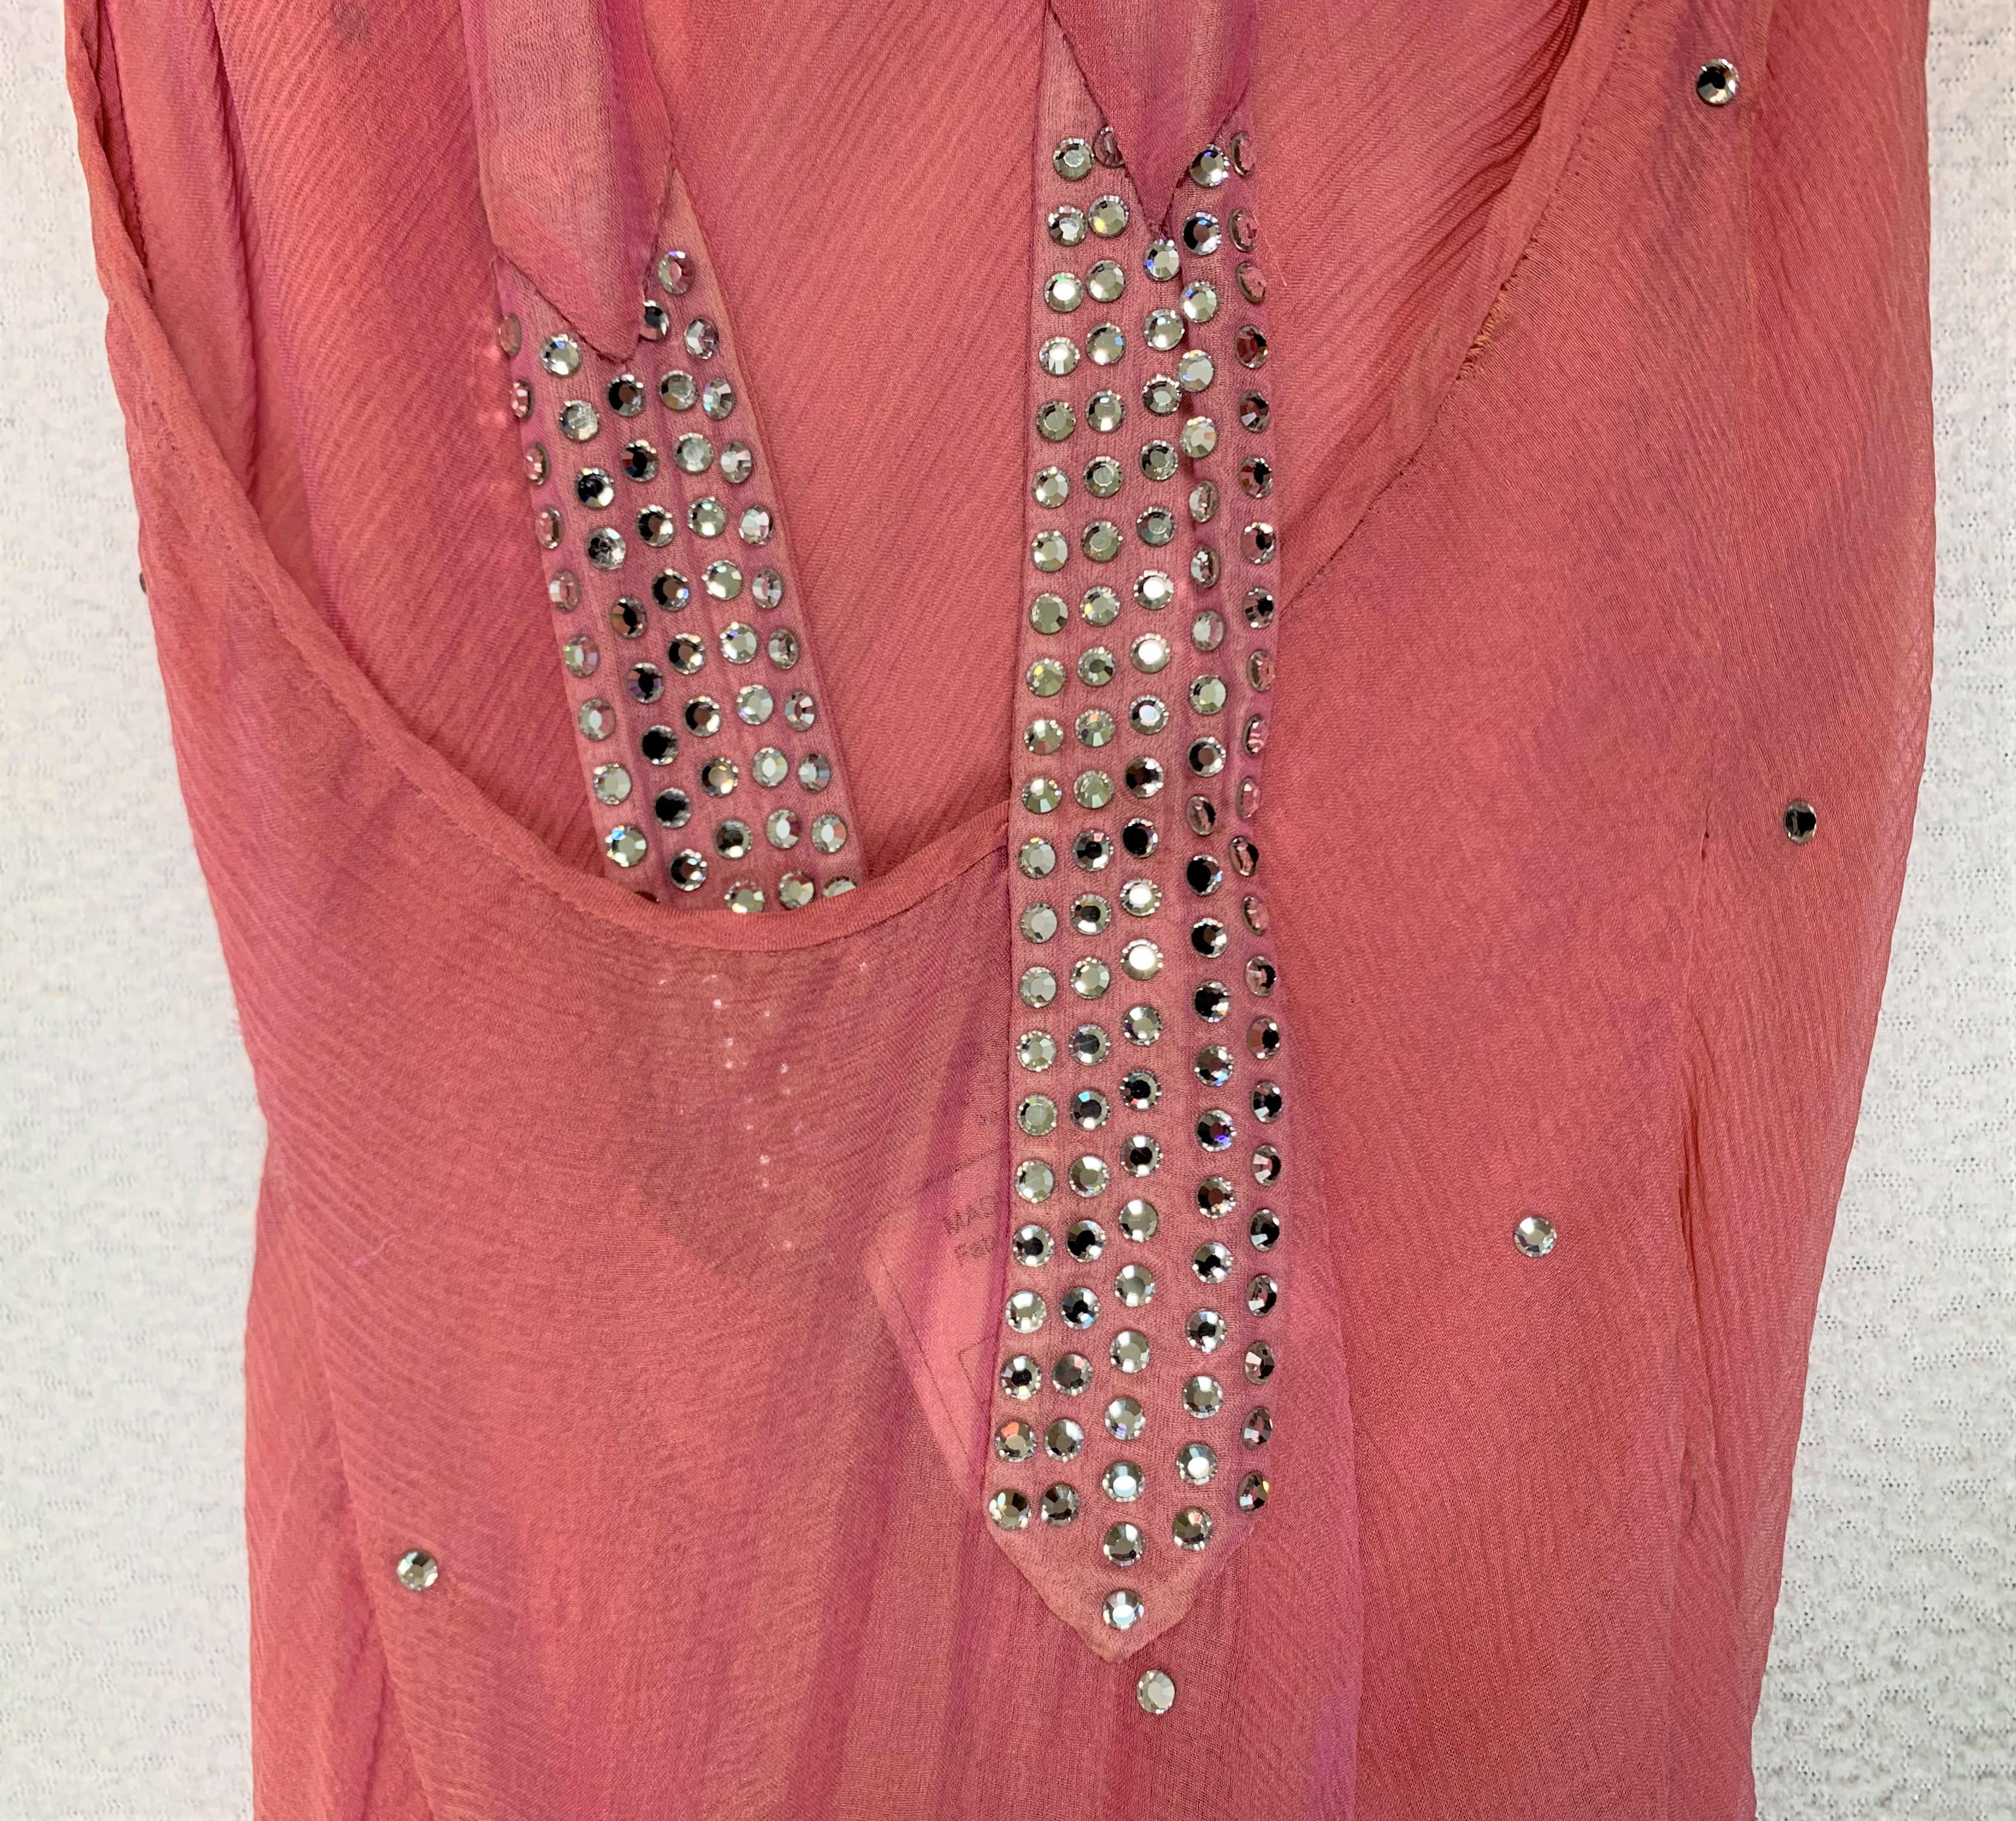 S/S 2002 Christian Dior John Galliano Sheer Pink Embellished Maxi Dress In Good Condition In Yukon, OK